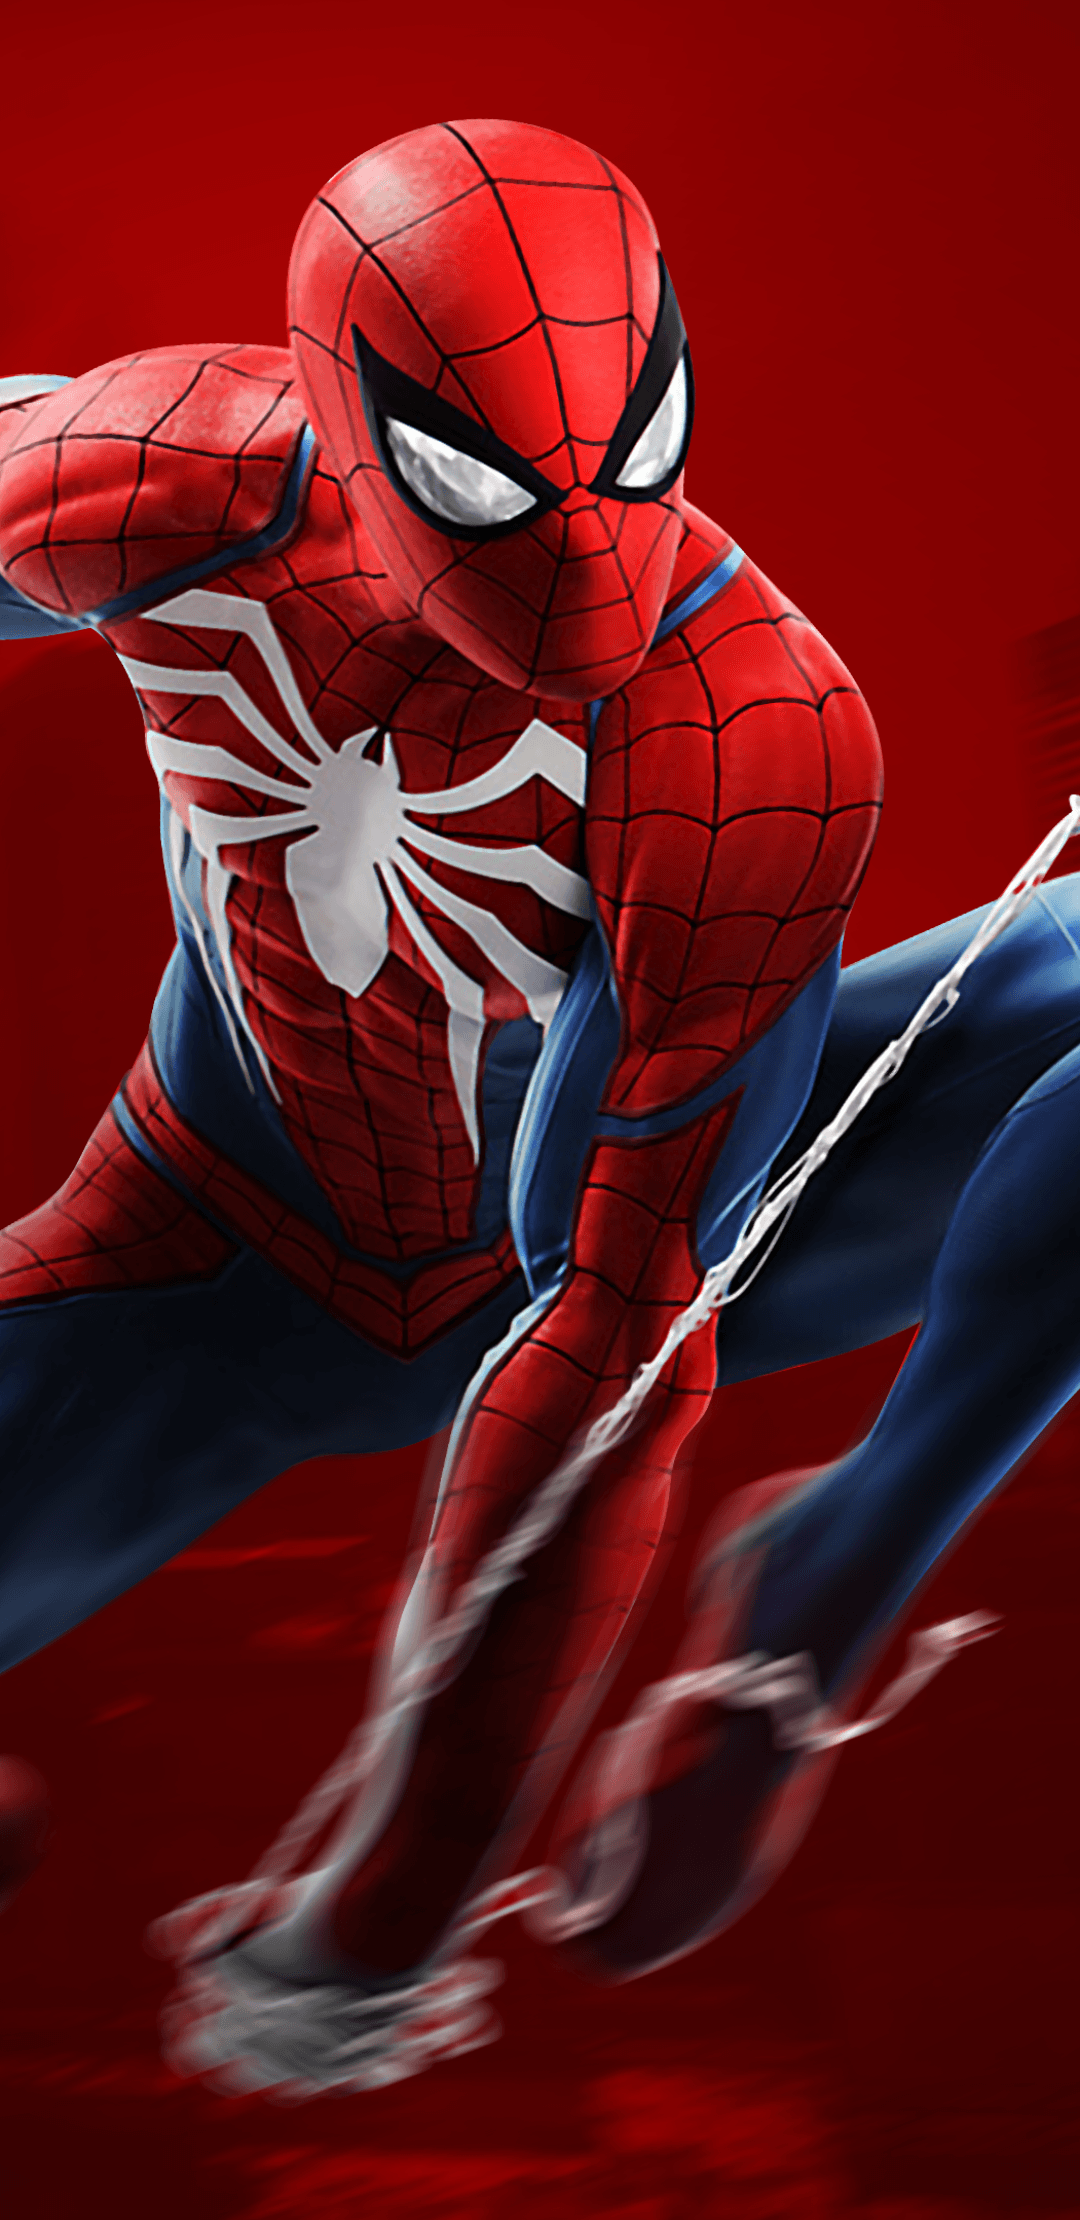 Download Spiderman Ps4 Wallpaper iPhone On Barraques.cat